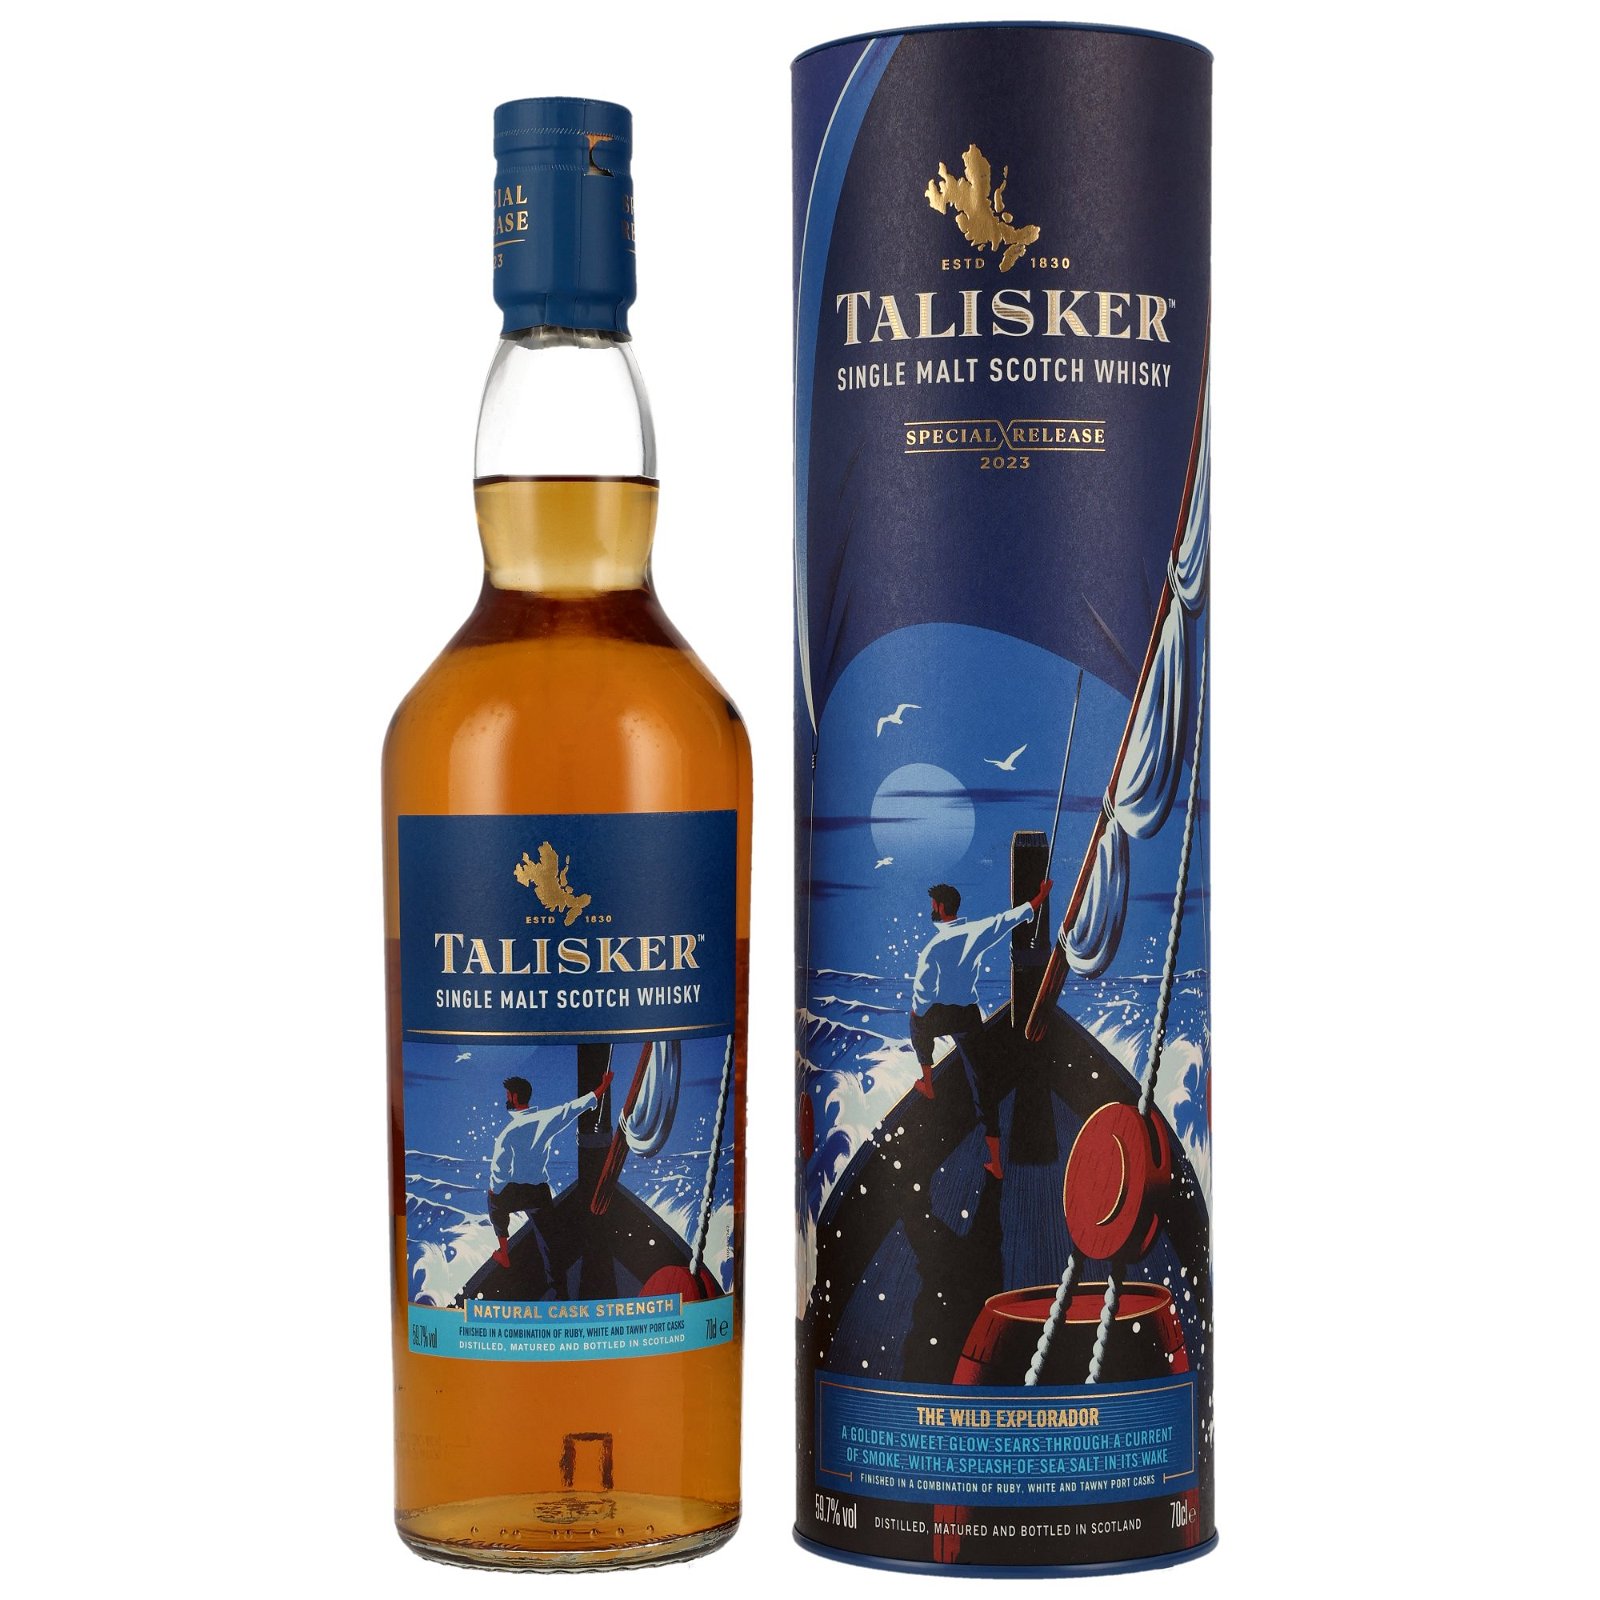 Talisker The Wild Explorador Port Cask Finish Special Release 2023